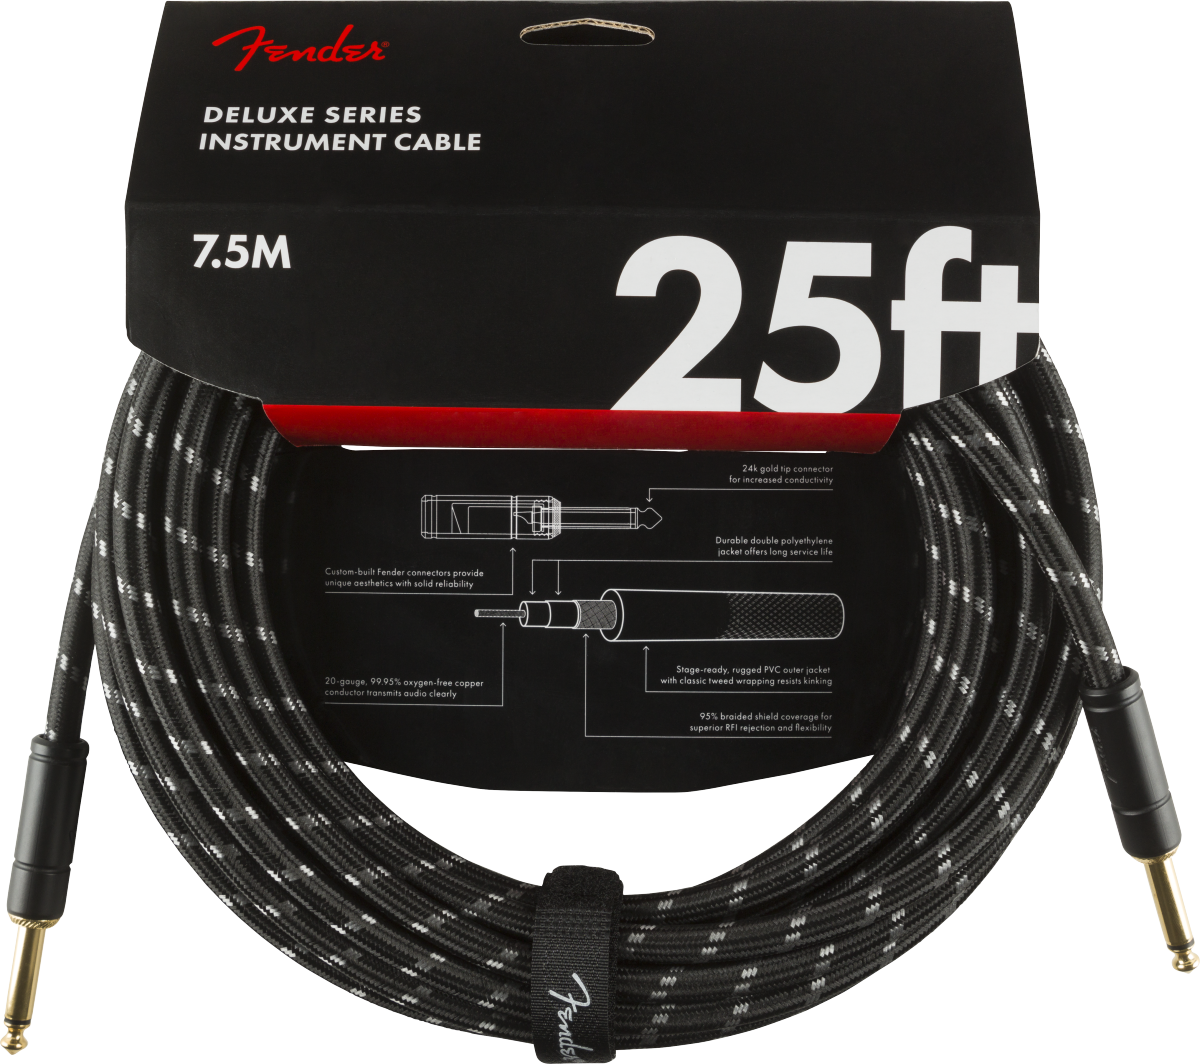 Fender 25ft Deluxe Instrument Cable - Black Tweed